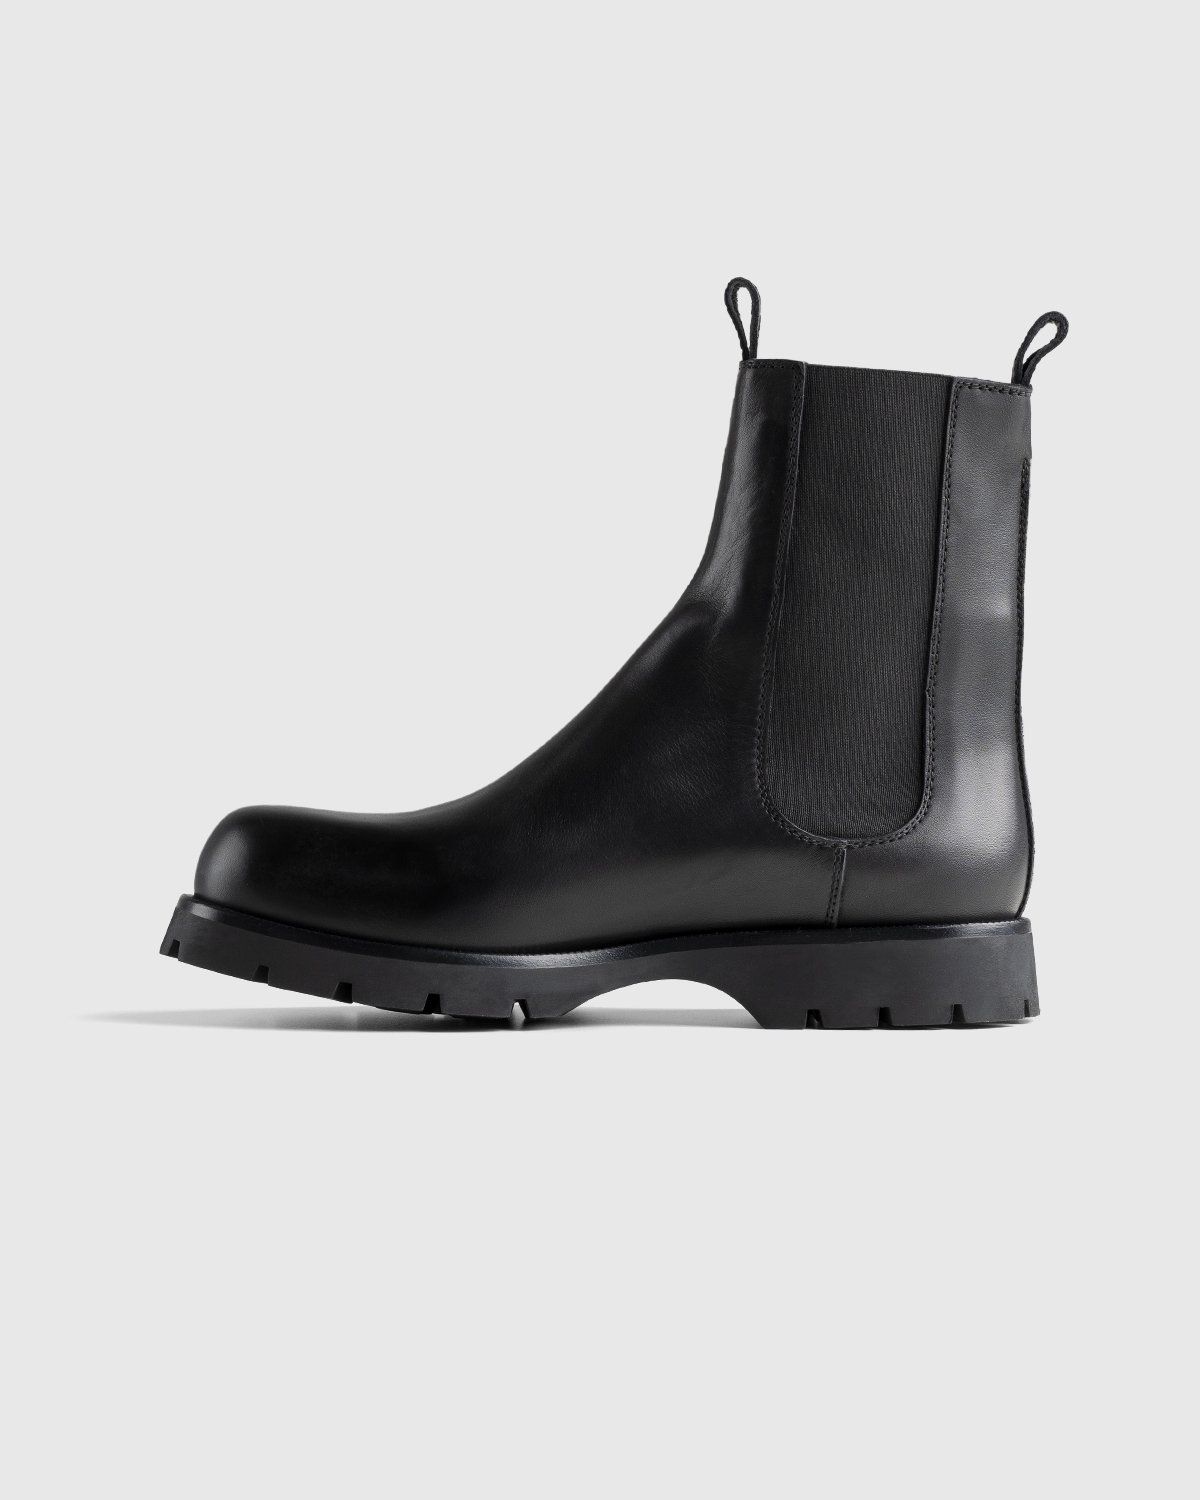 Jil Sander – Chelsea Boots Black - Chelsea Boots - Black - Image 2